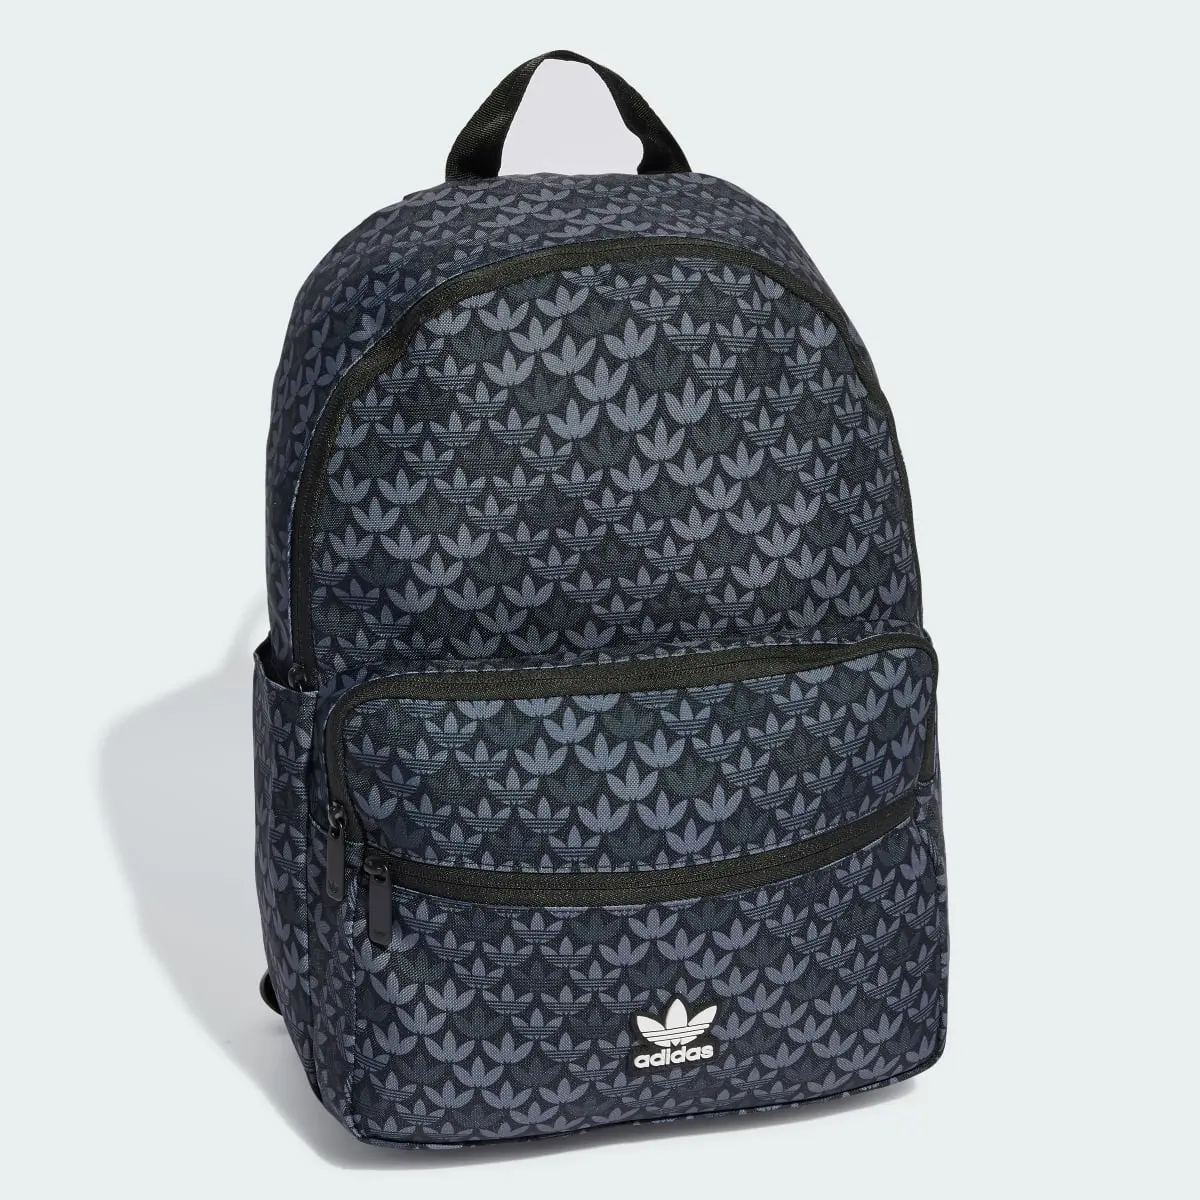 Adidas Monogram Backpack. 2